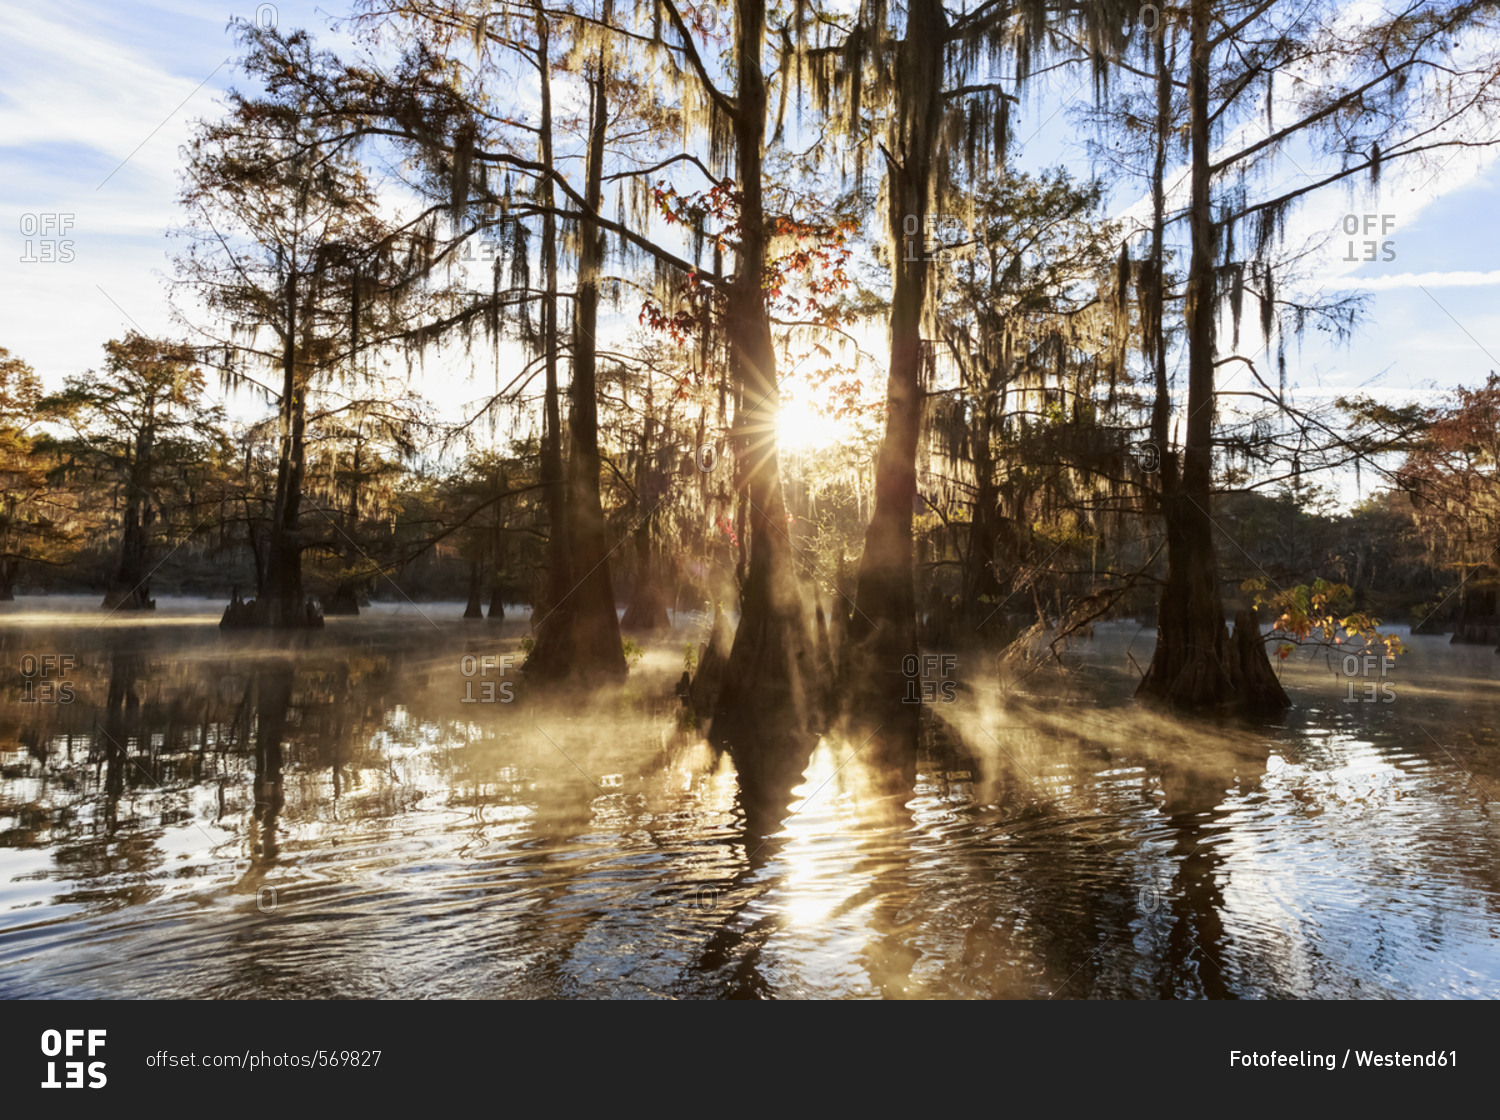 USA - Texas - Louisiana - Caddo Lake - Benton Lake - bald cypress forest